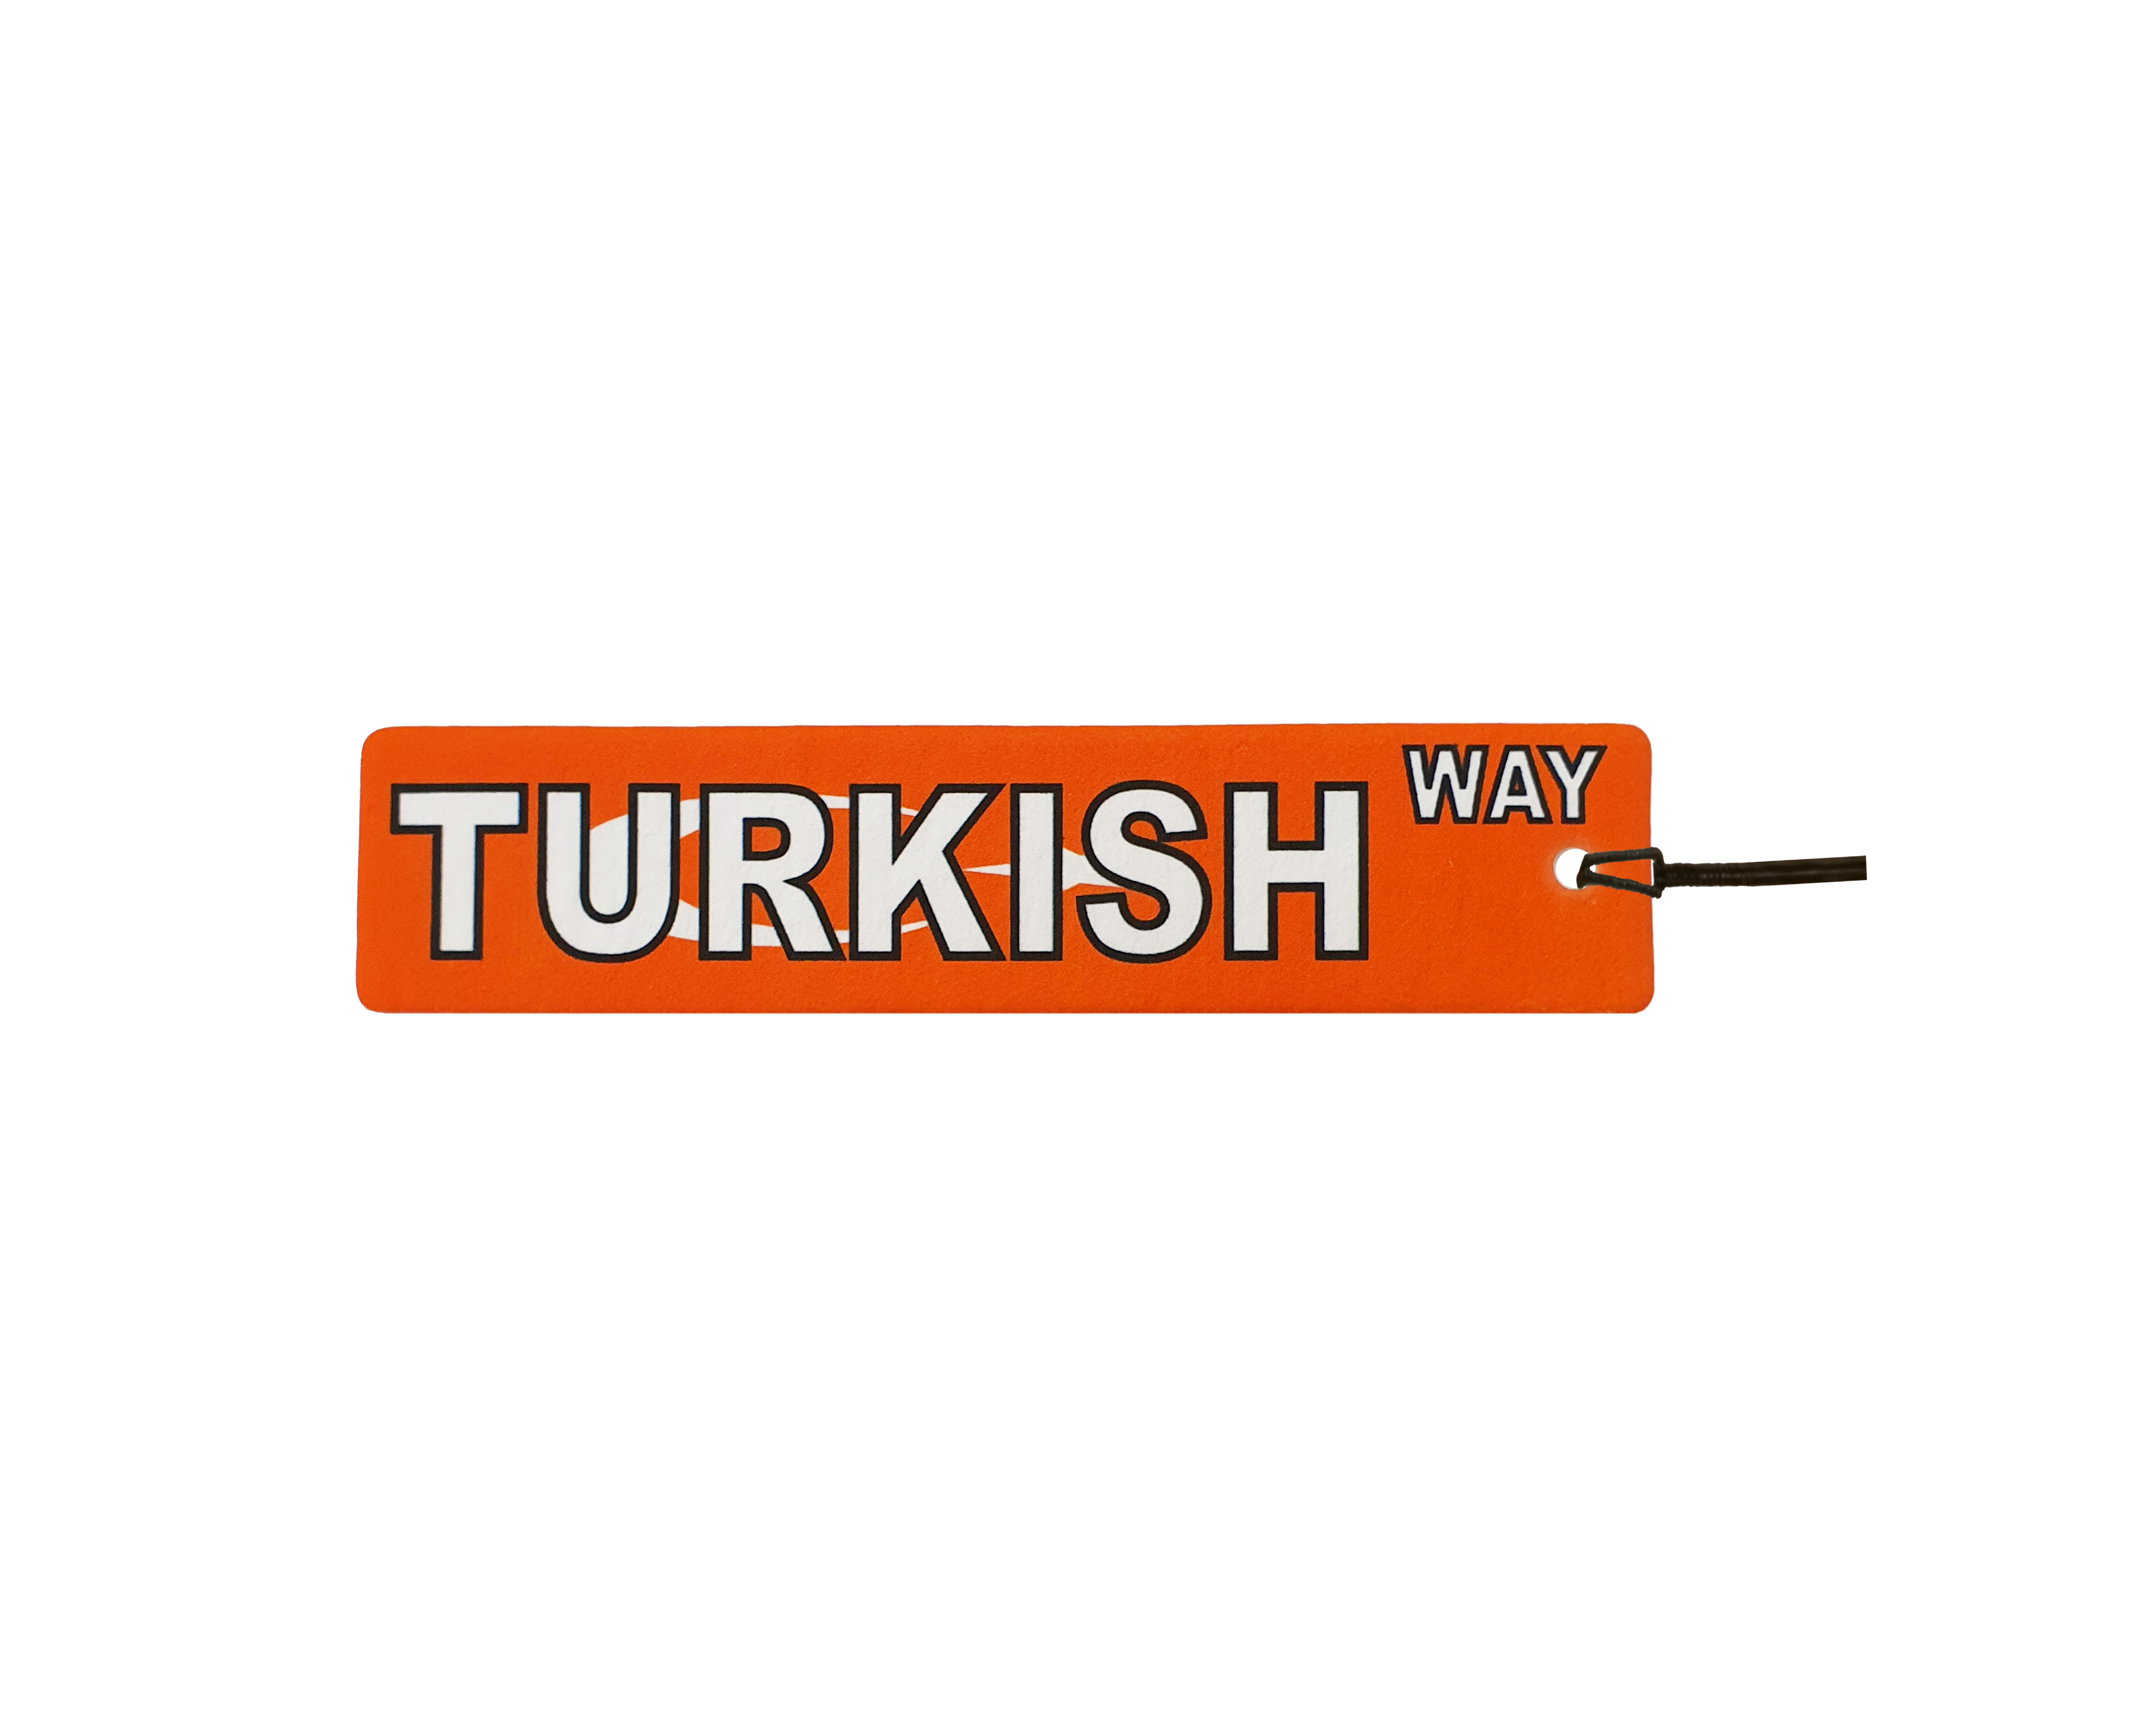 Turkish Way Street Sign